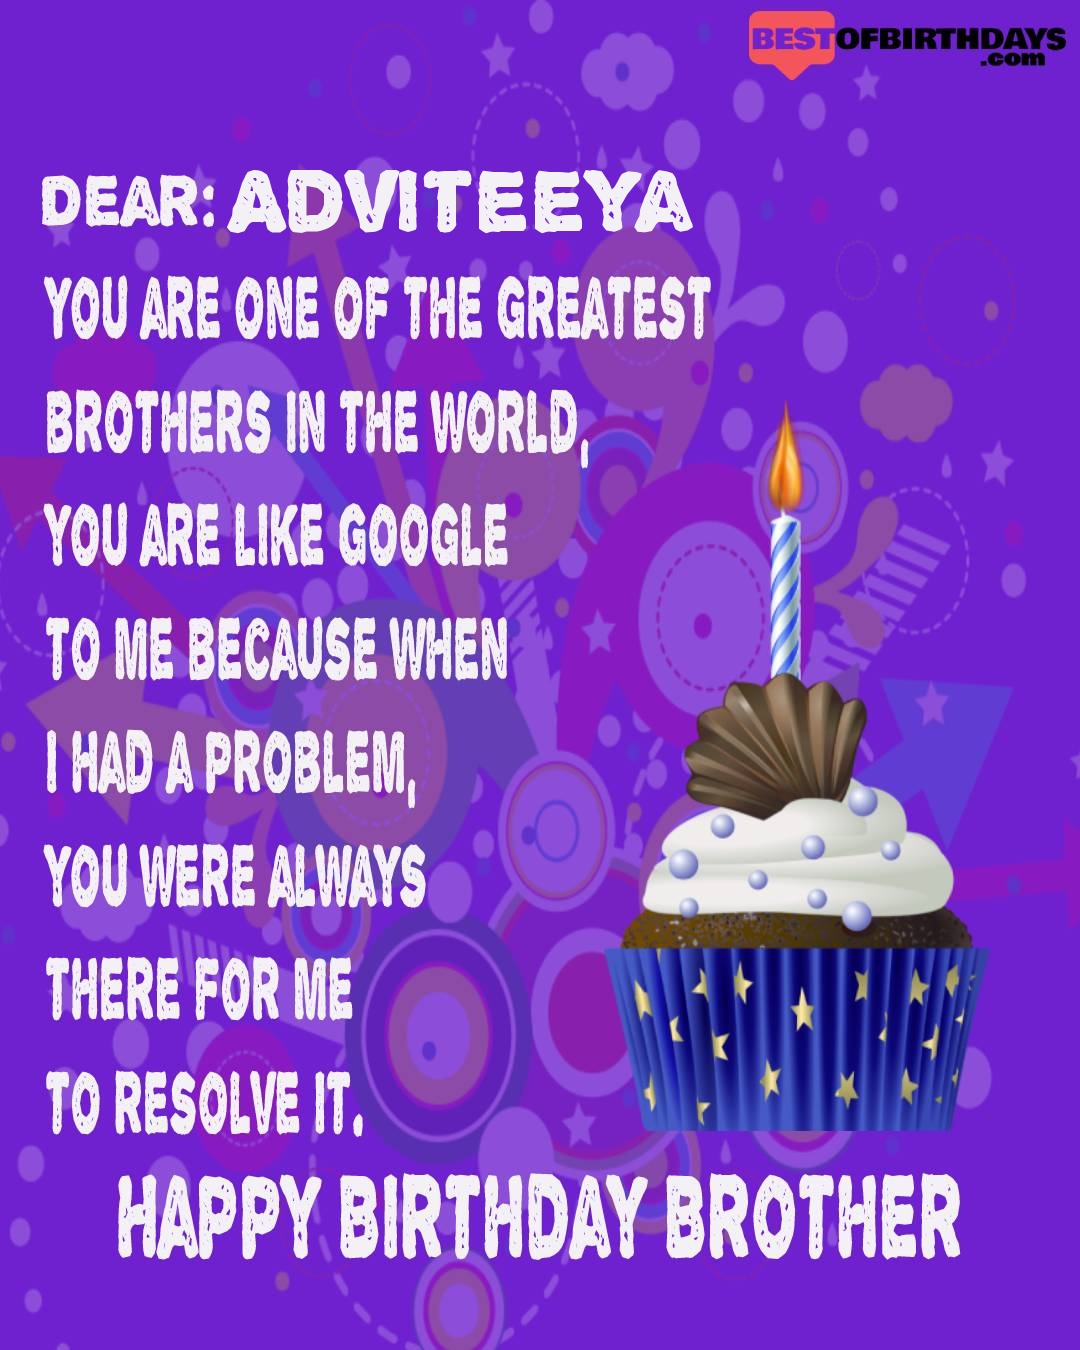 Happy birthday adviteeya bhai brother bro